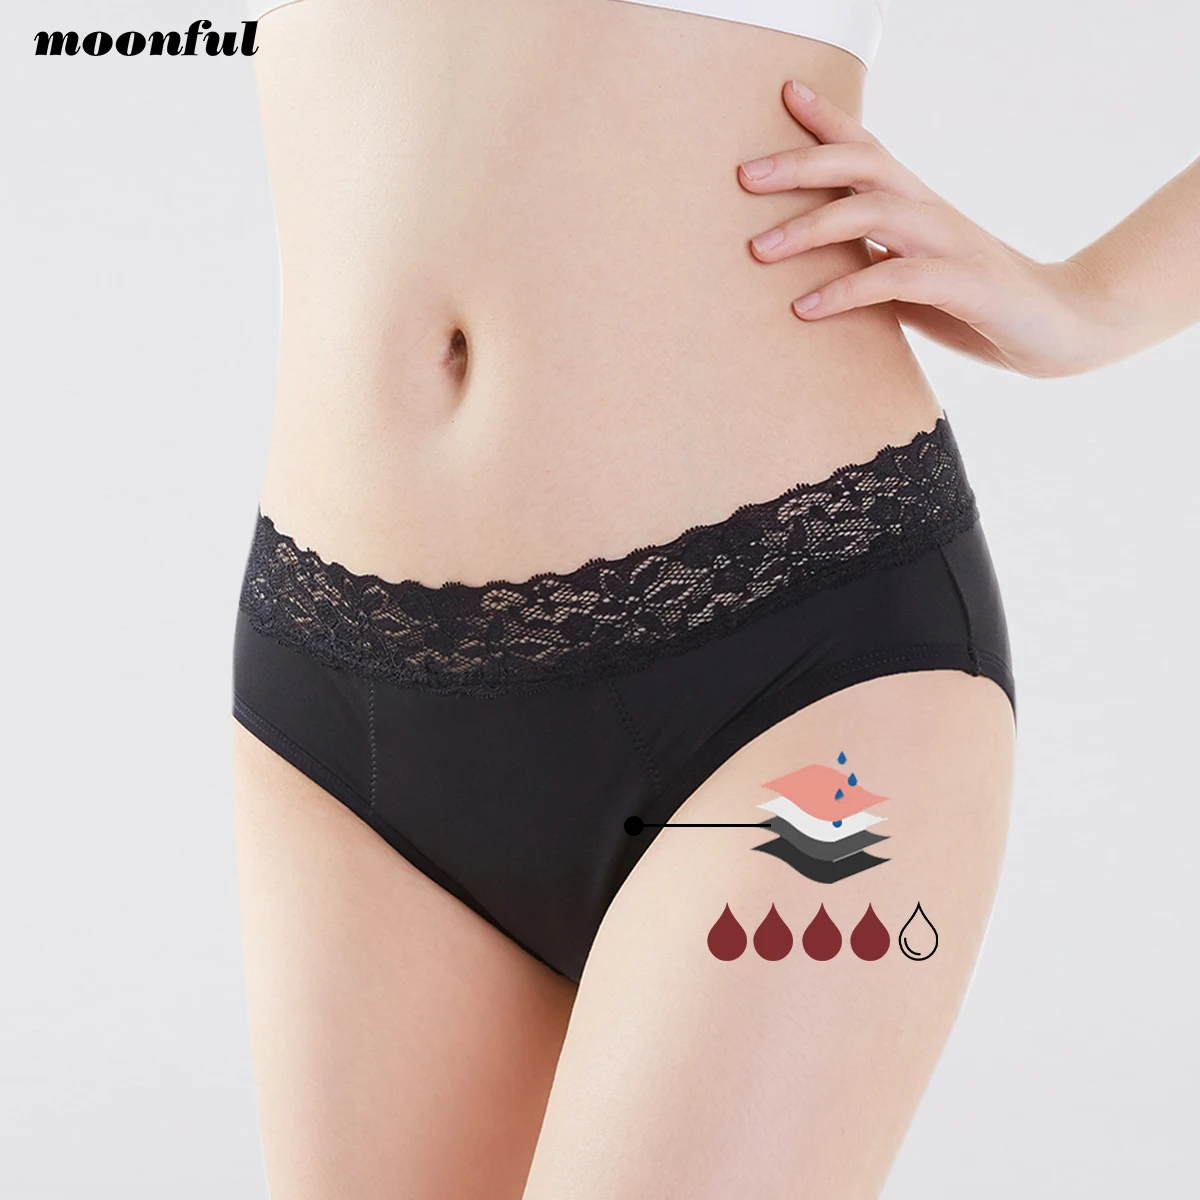 Very Absorbent Menstrual Panties Woman Period Panties 4-Layer Period Underwear for Heavy Flow Culotte Menstruelle Femme